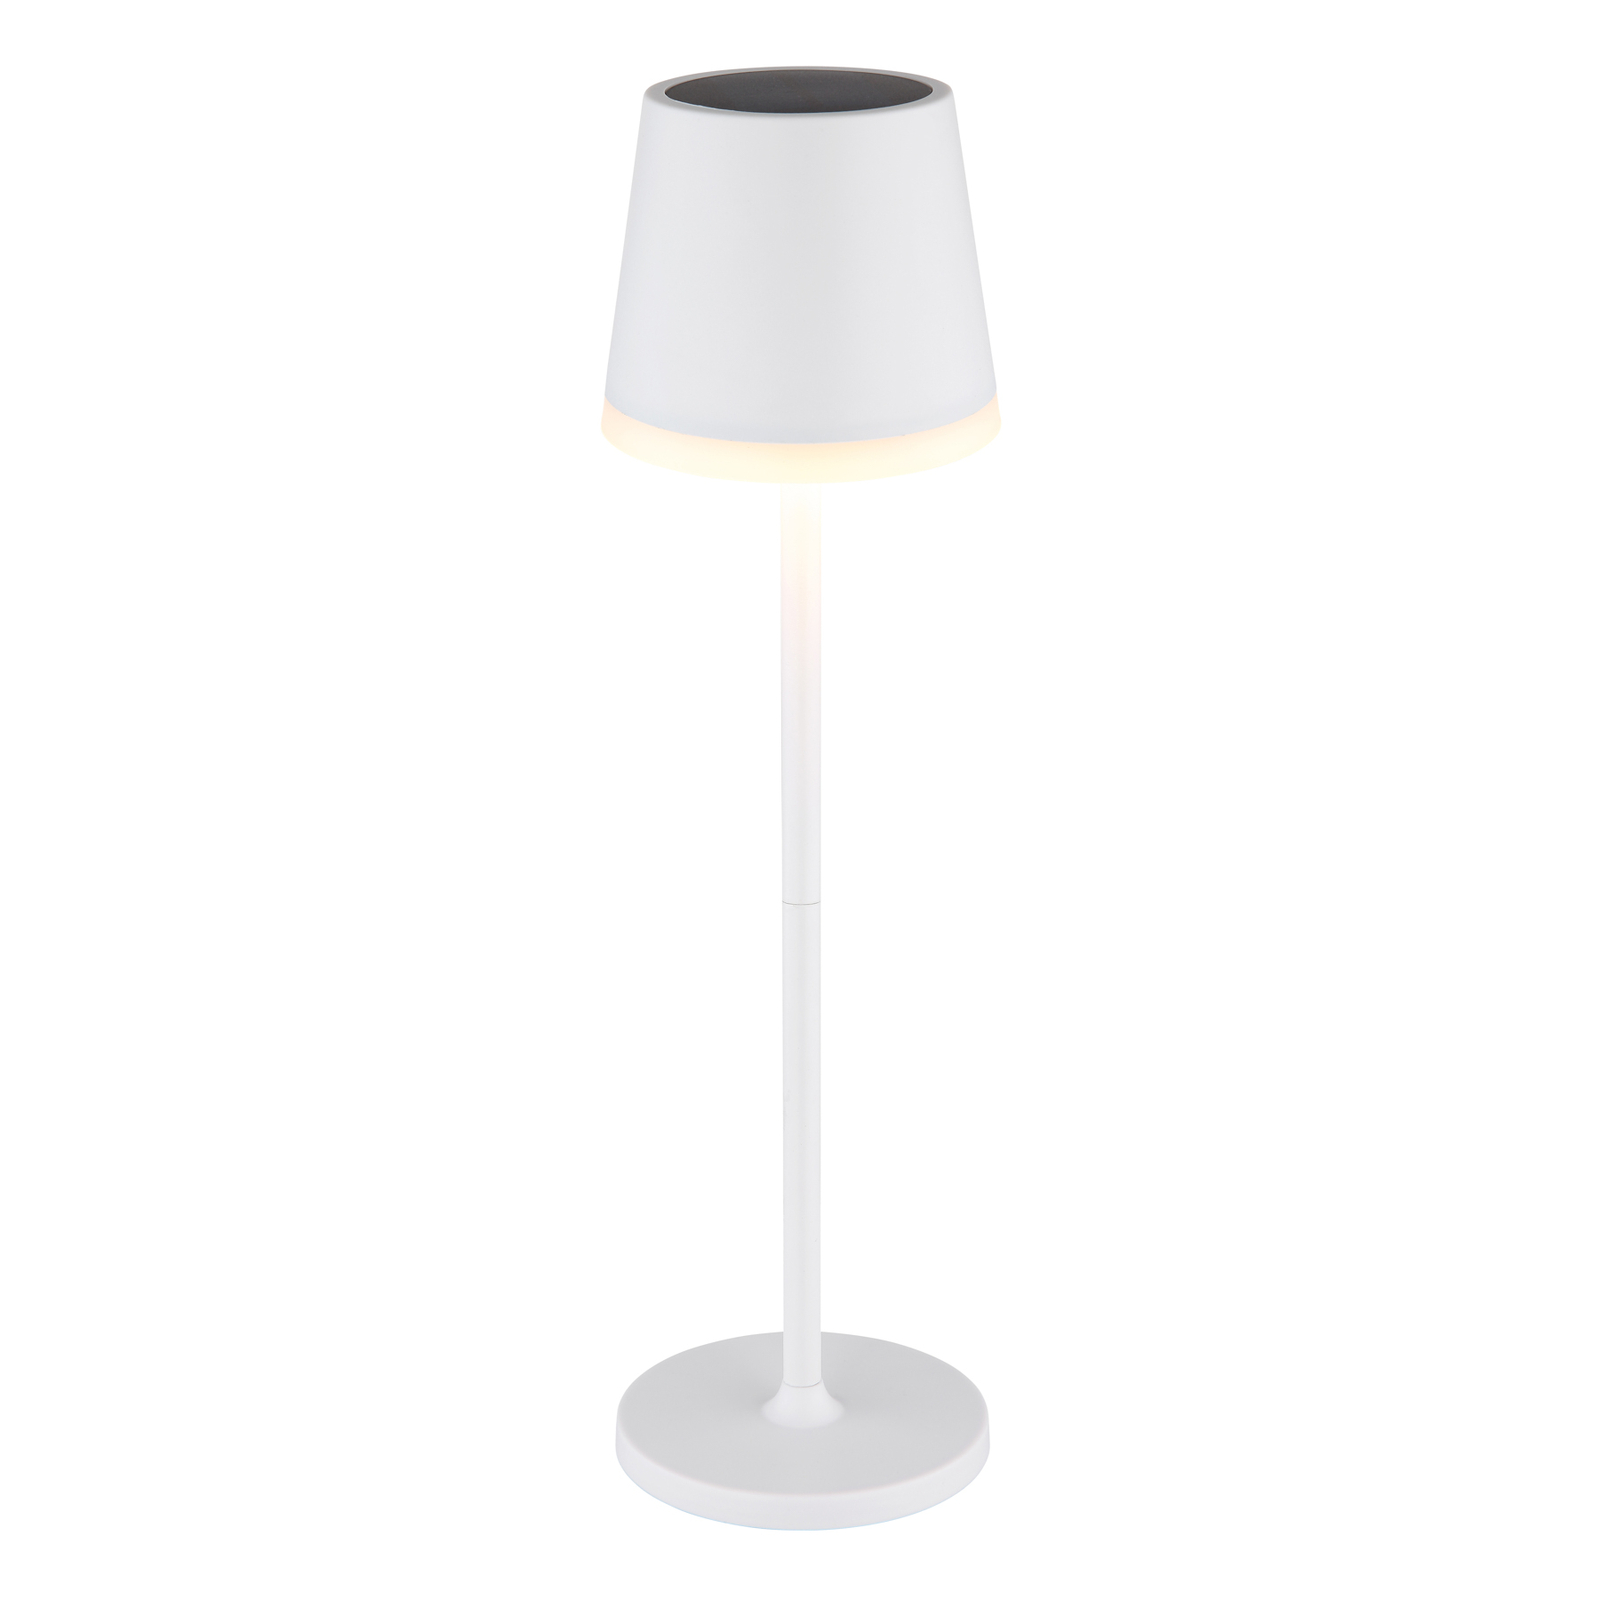 36637 solar table lamp, IP44, white